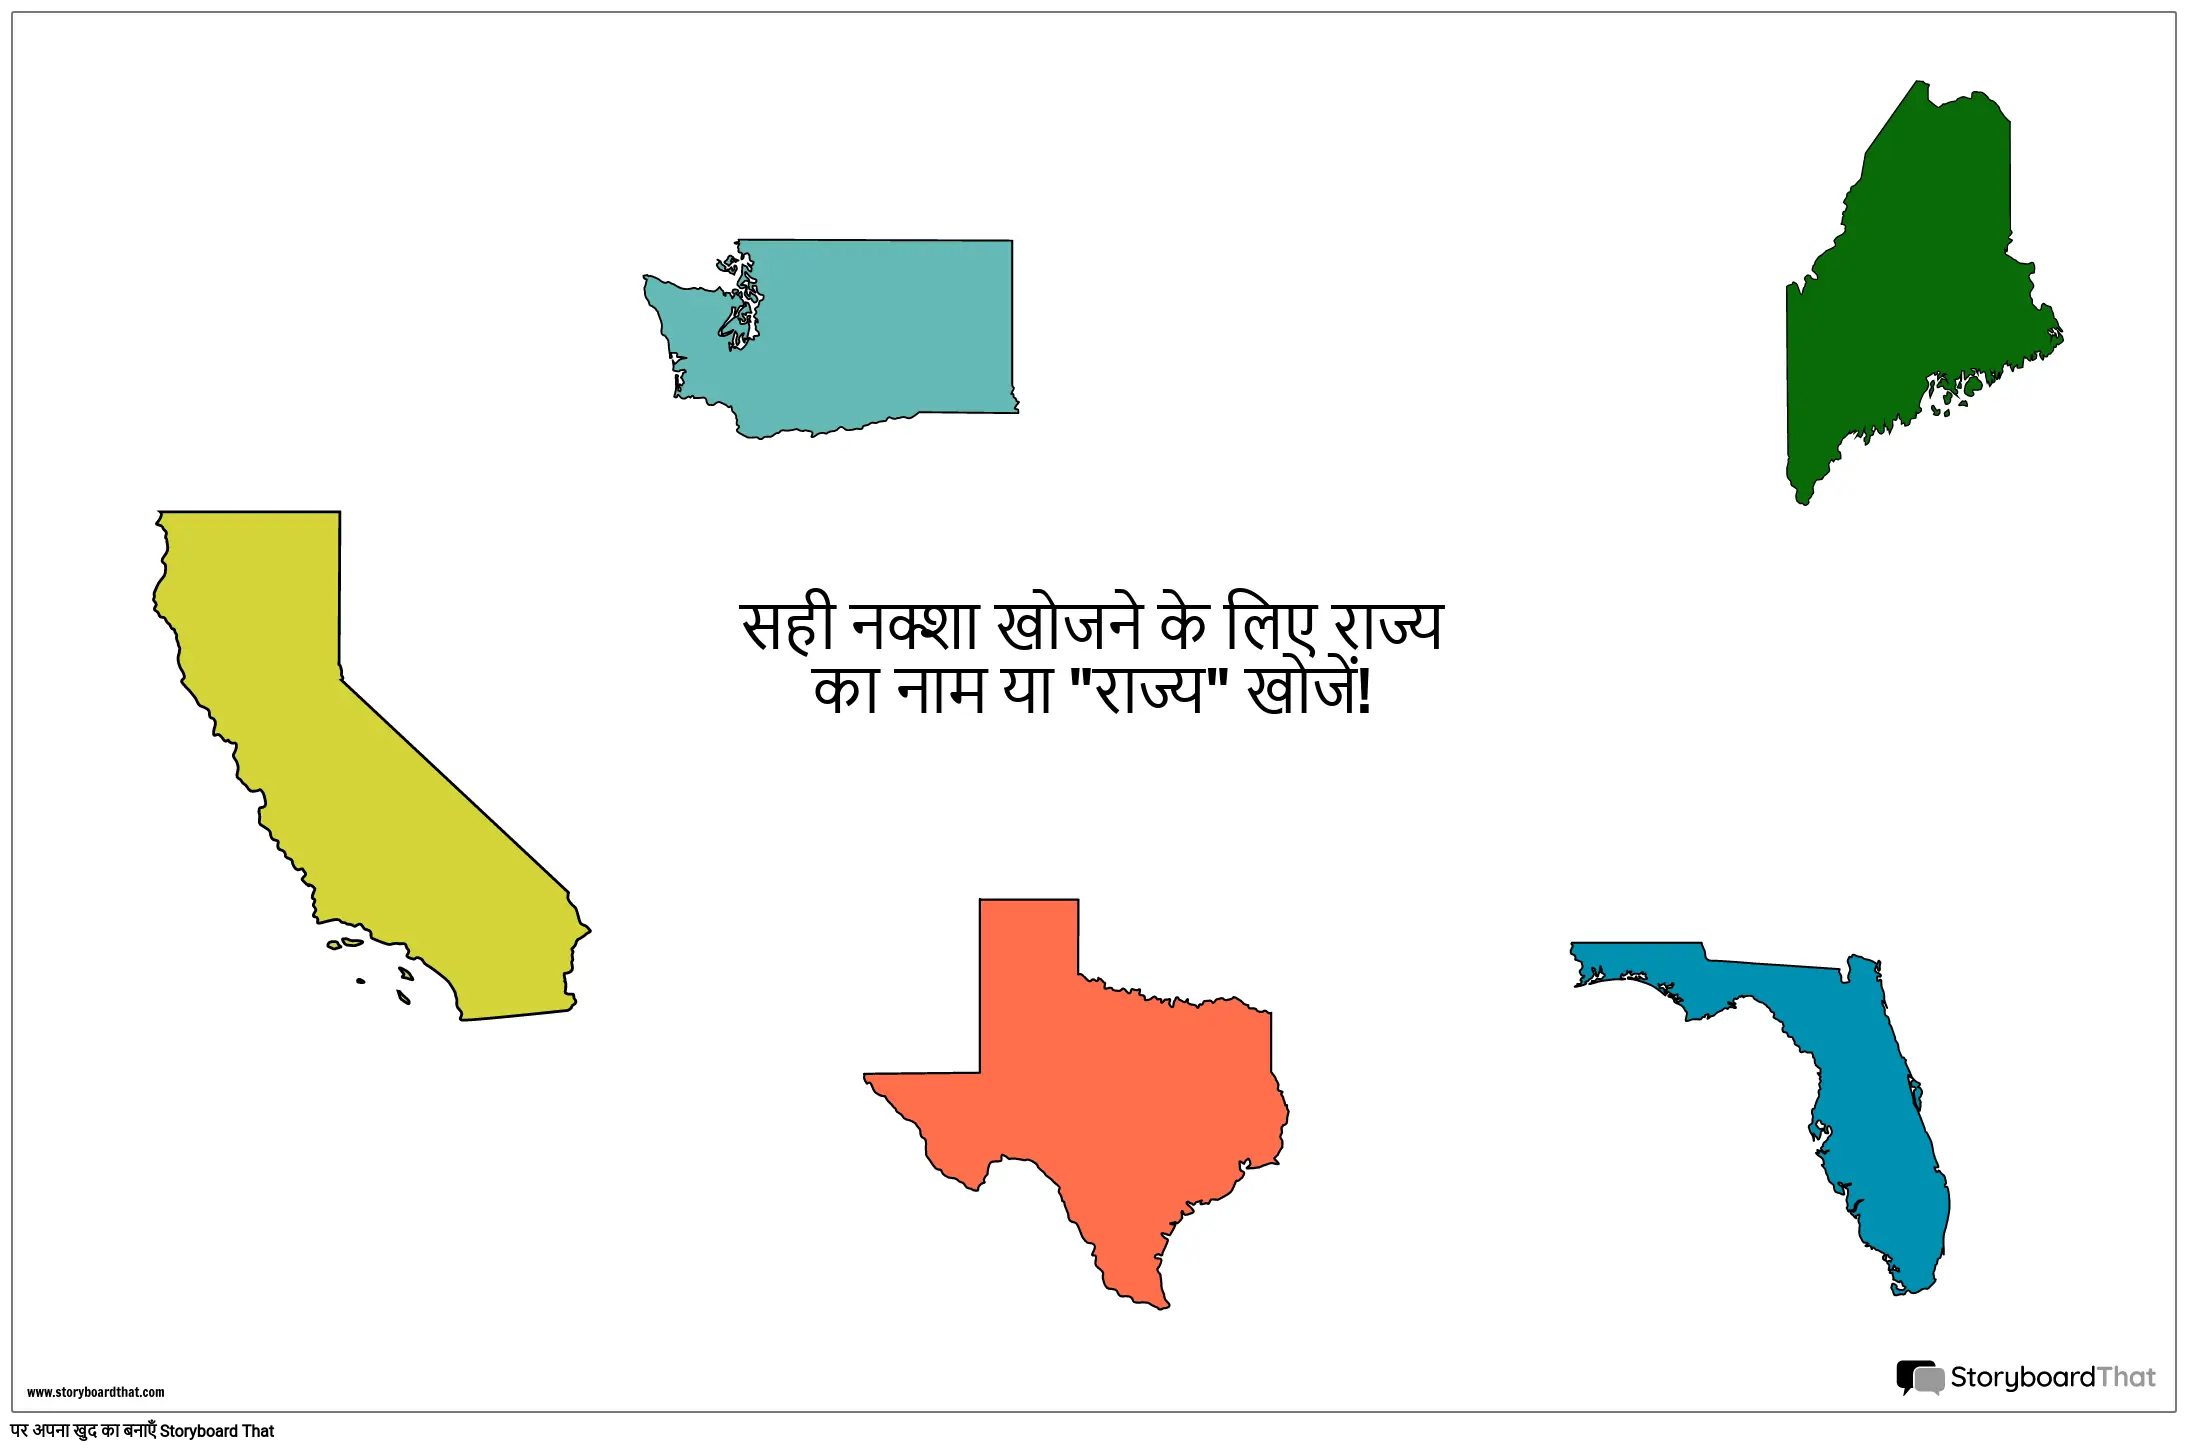 राज्य परियोजना मानचित्र टेम्पलेट